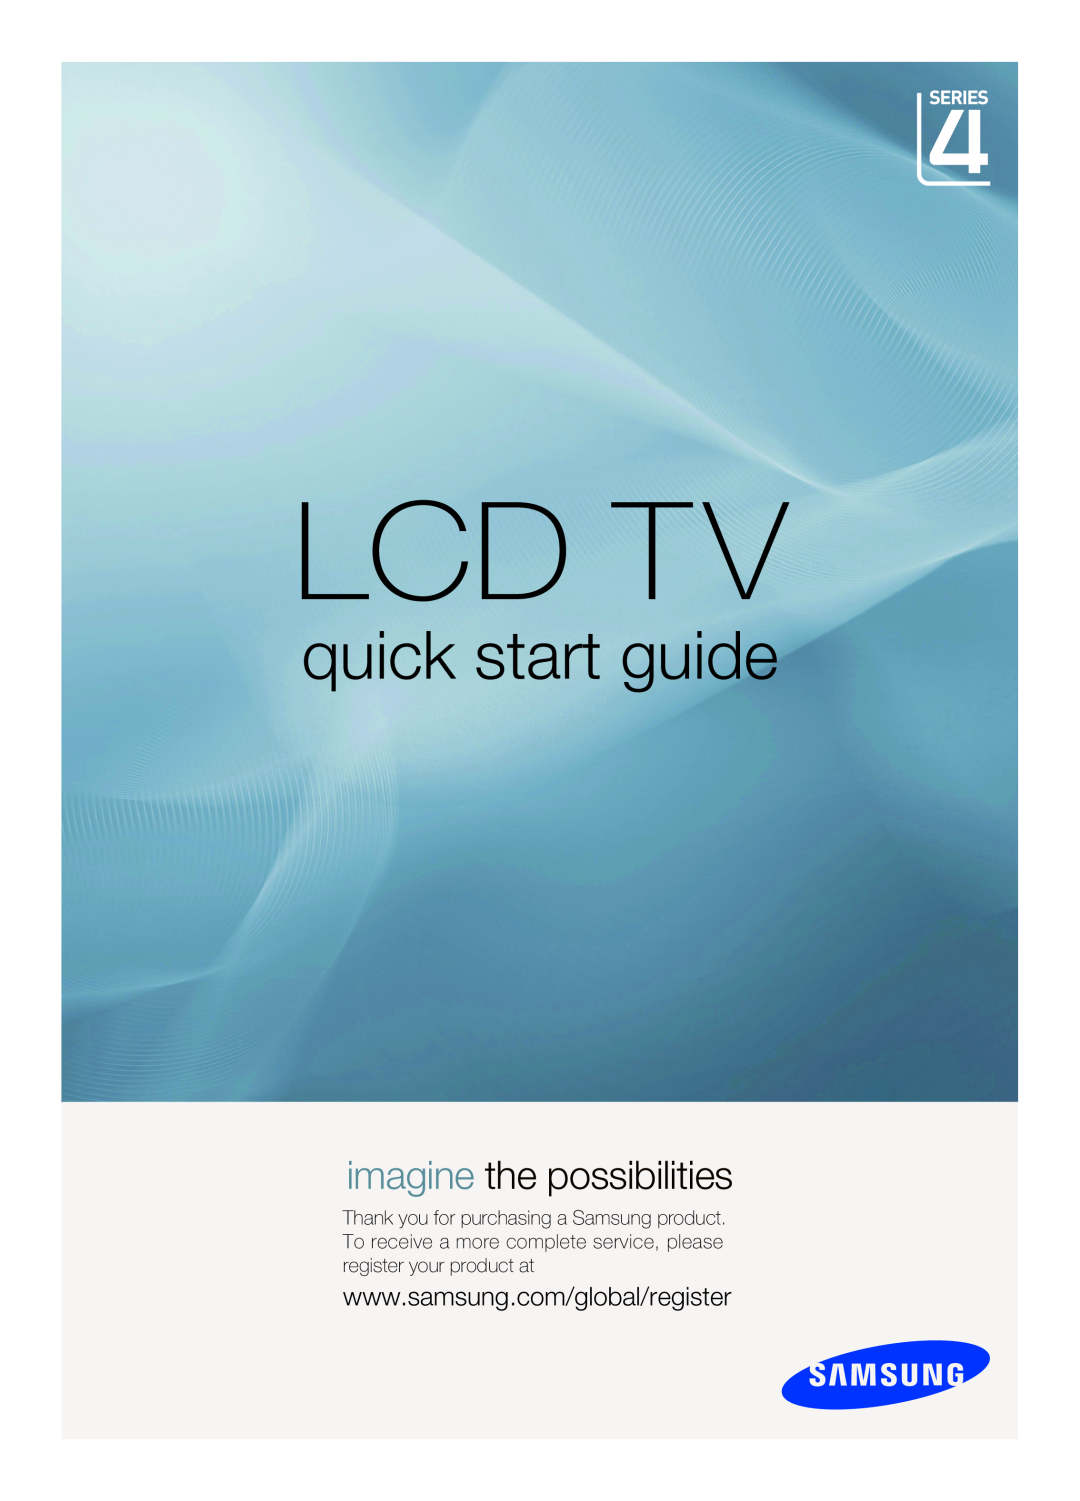 Samsung LA26A450C1N quick start Lcd Tv, quick start guide, imagine the possibilities 